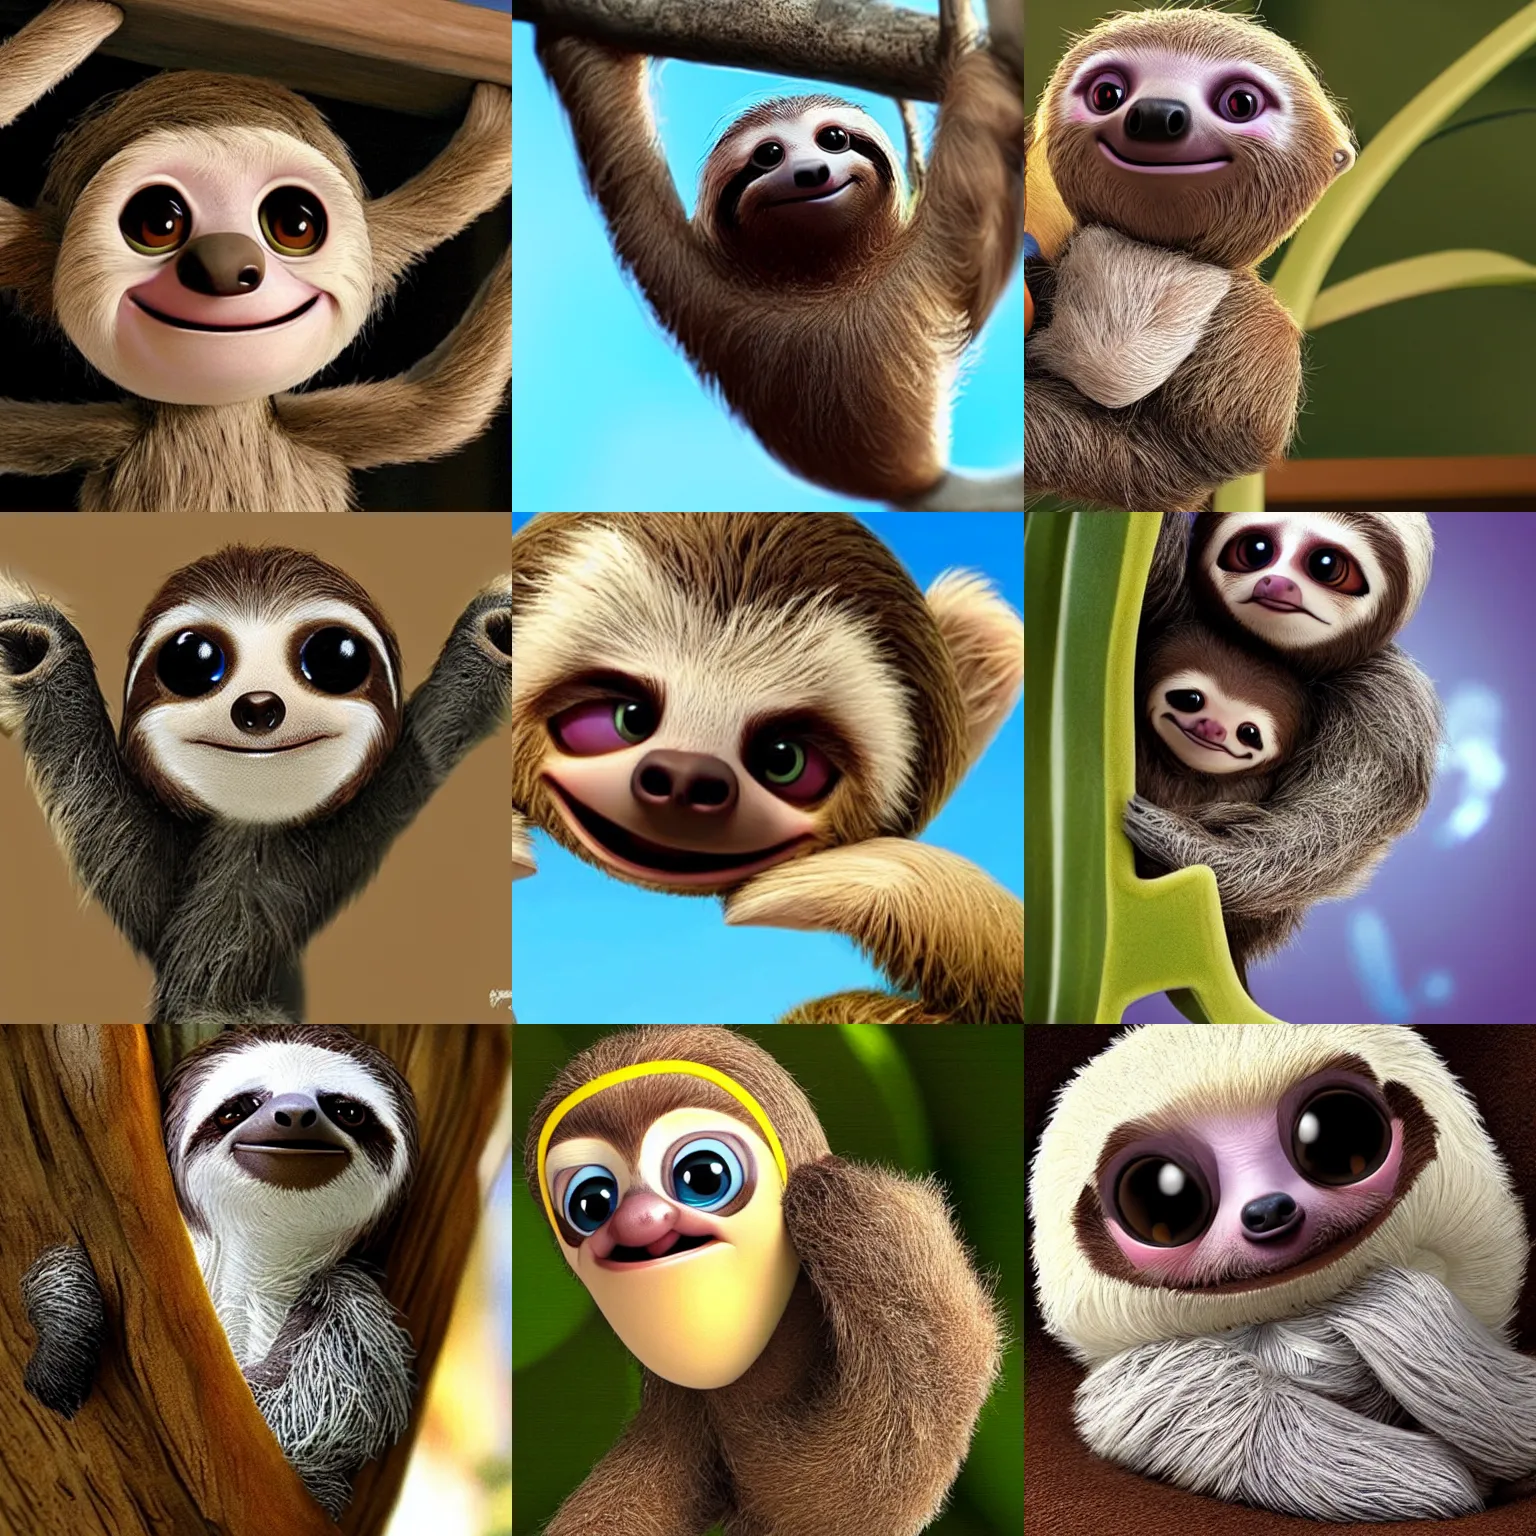 Prompt: finster the baby sloth, pixar movie